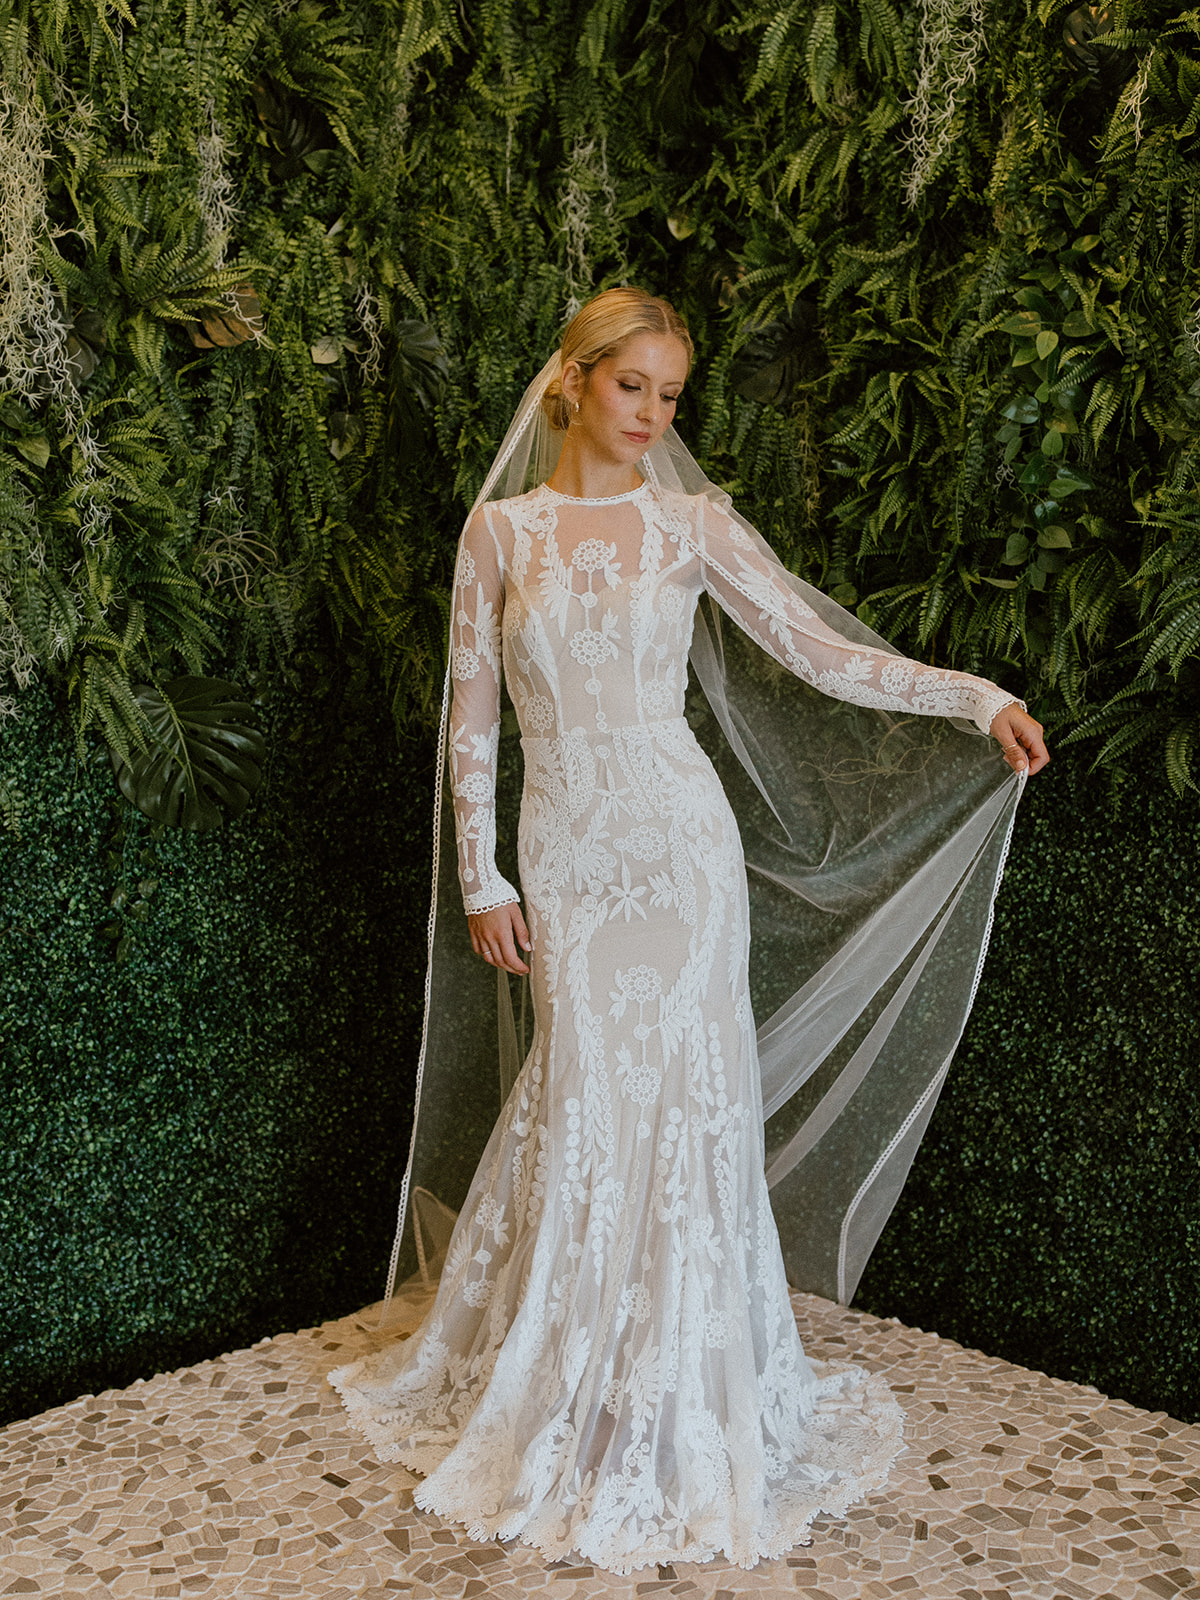 white lace wedding dress